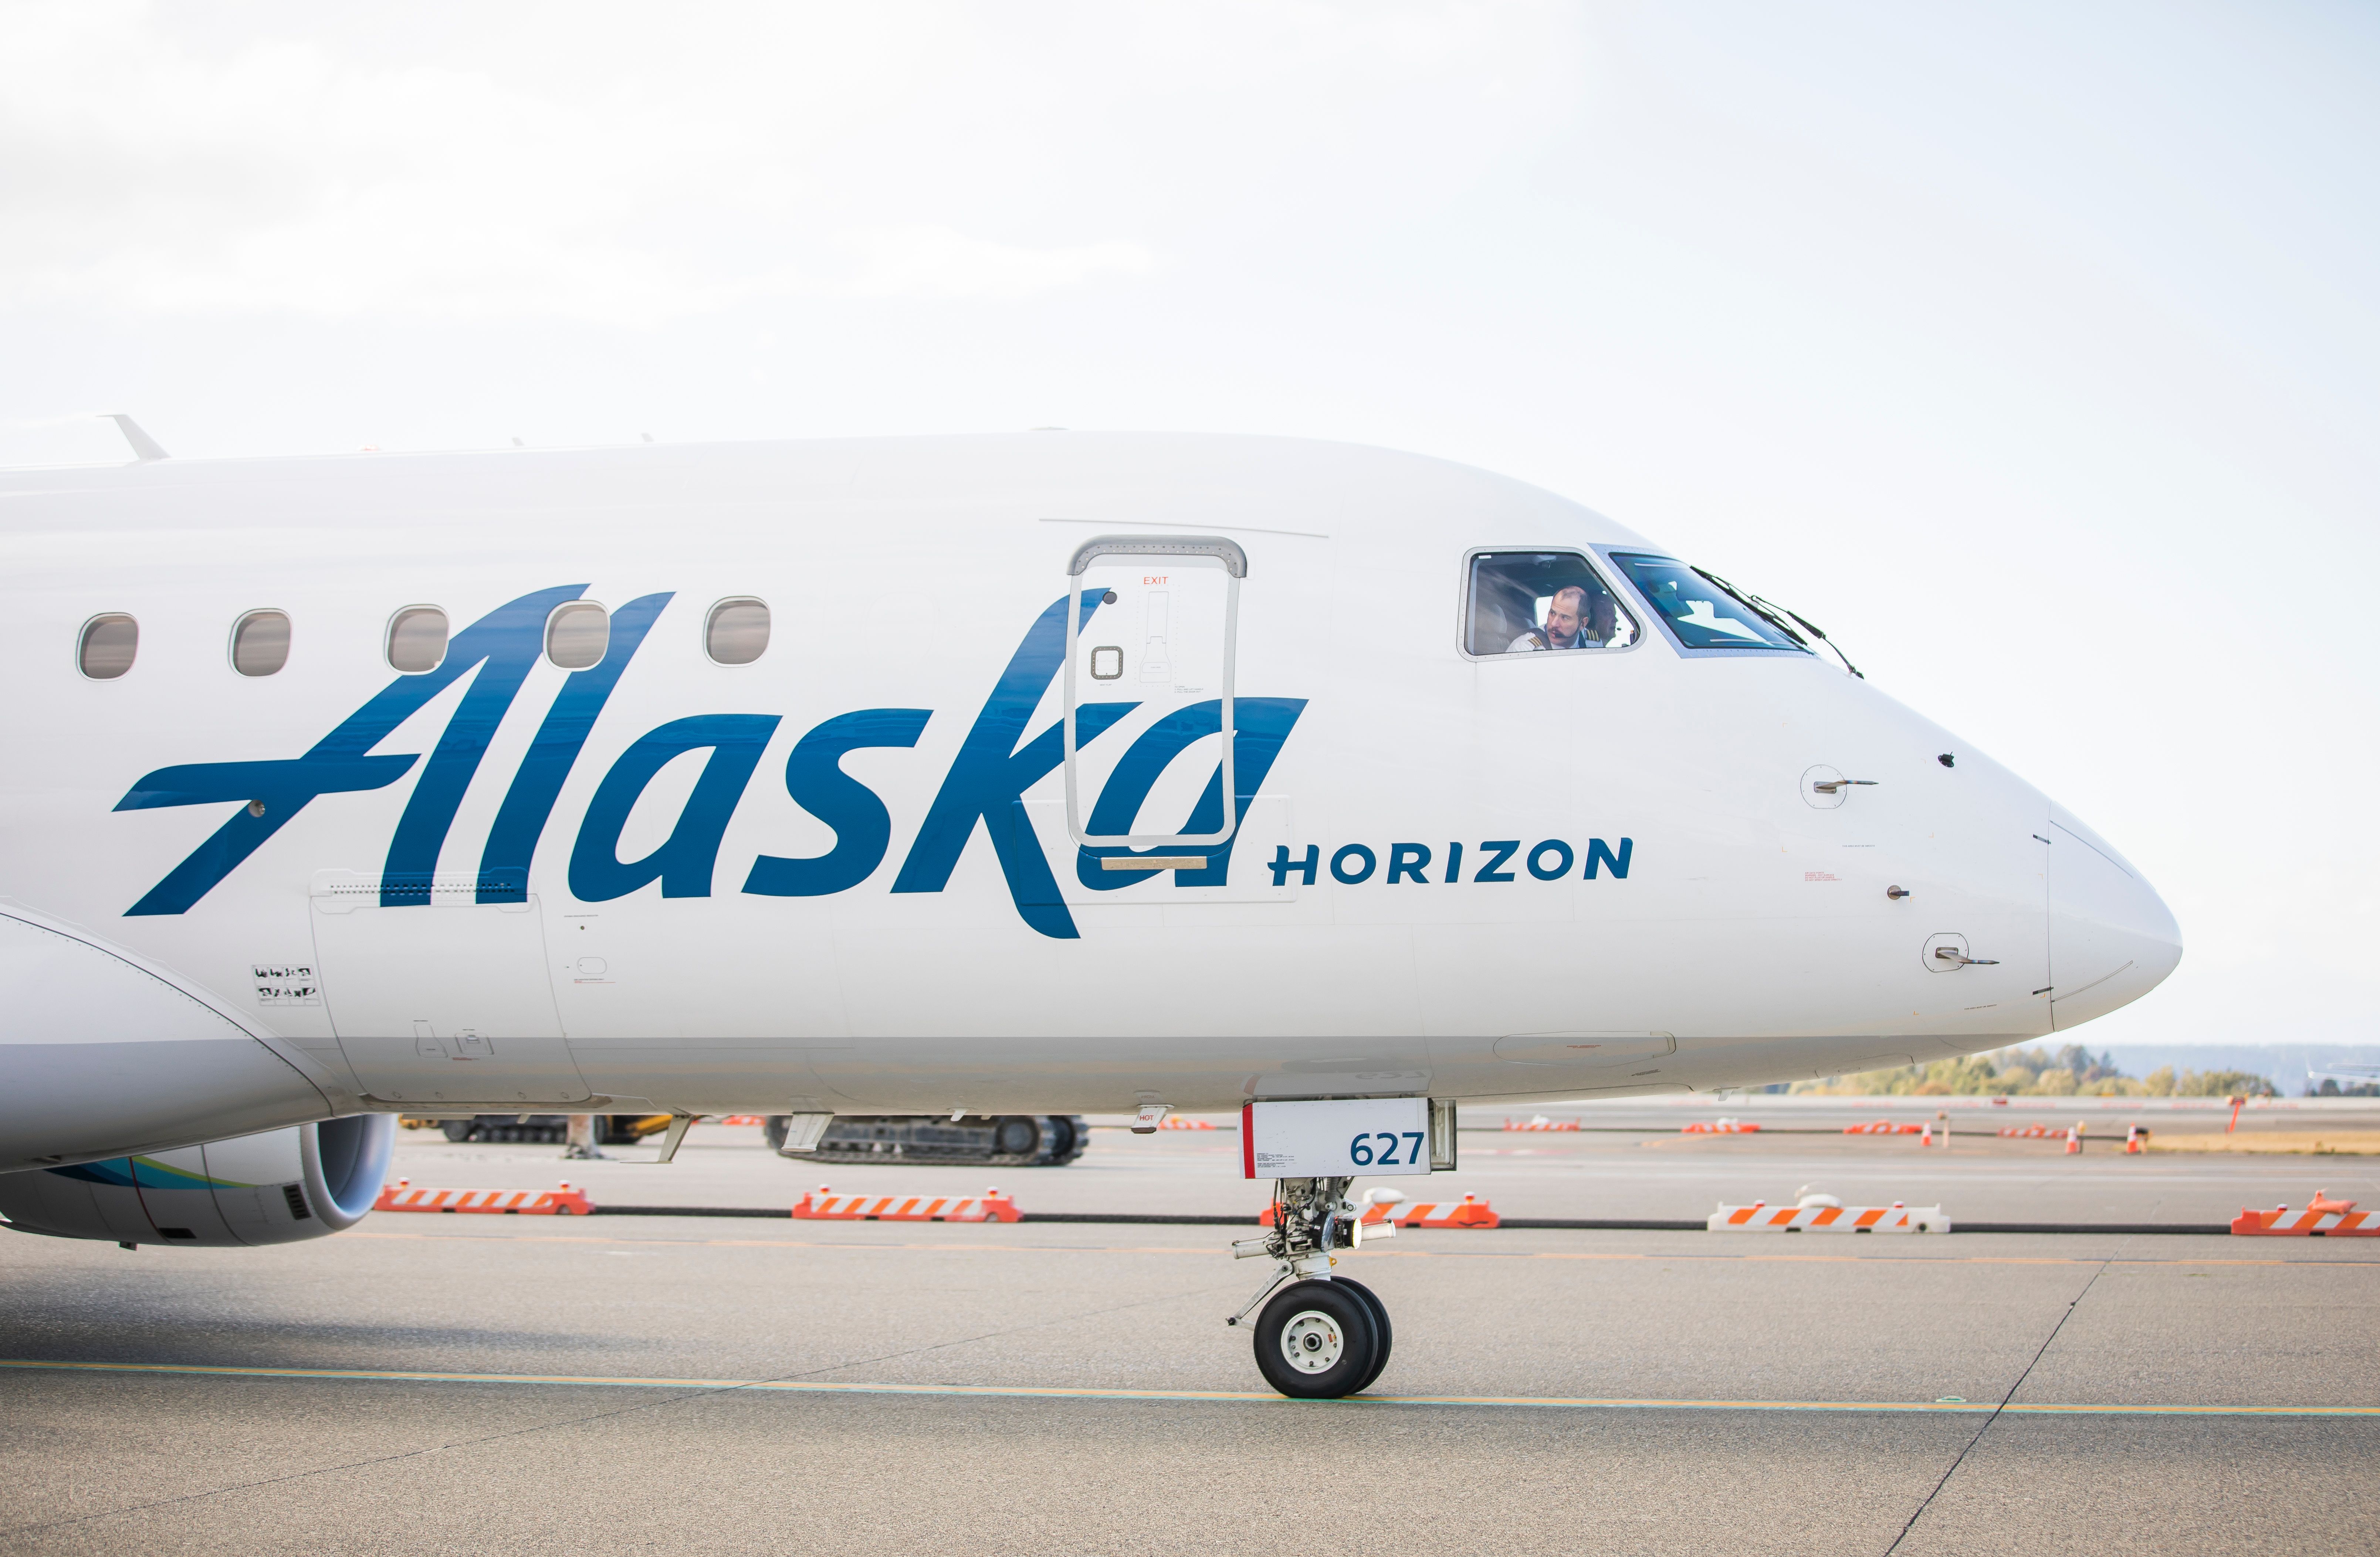 An Horizon Air (Alaska Airlines subsidiary) aircraft. 